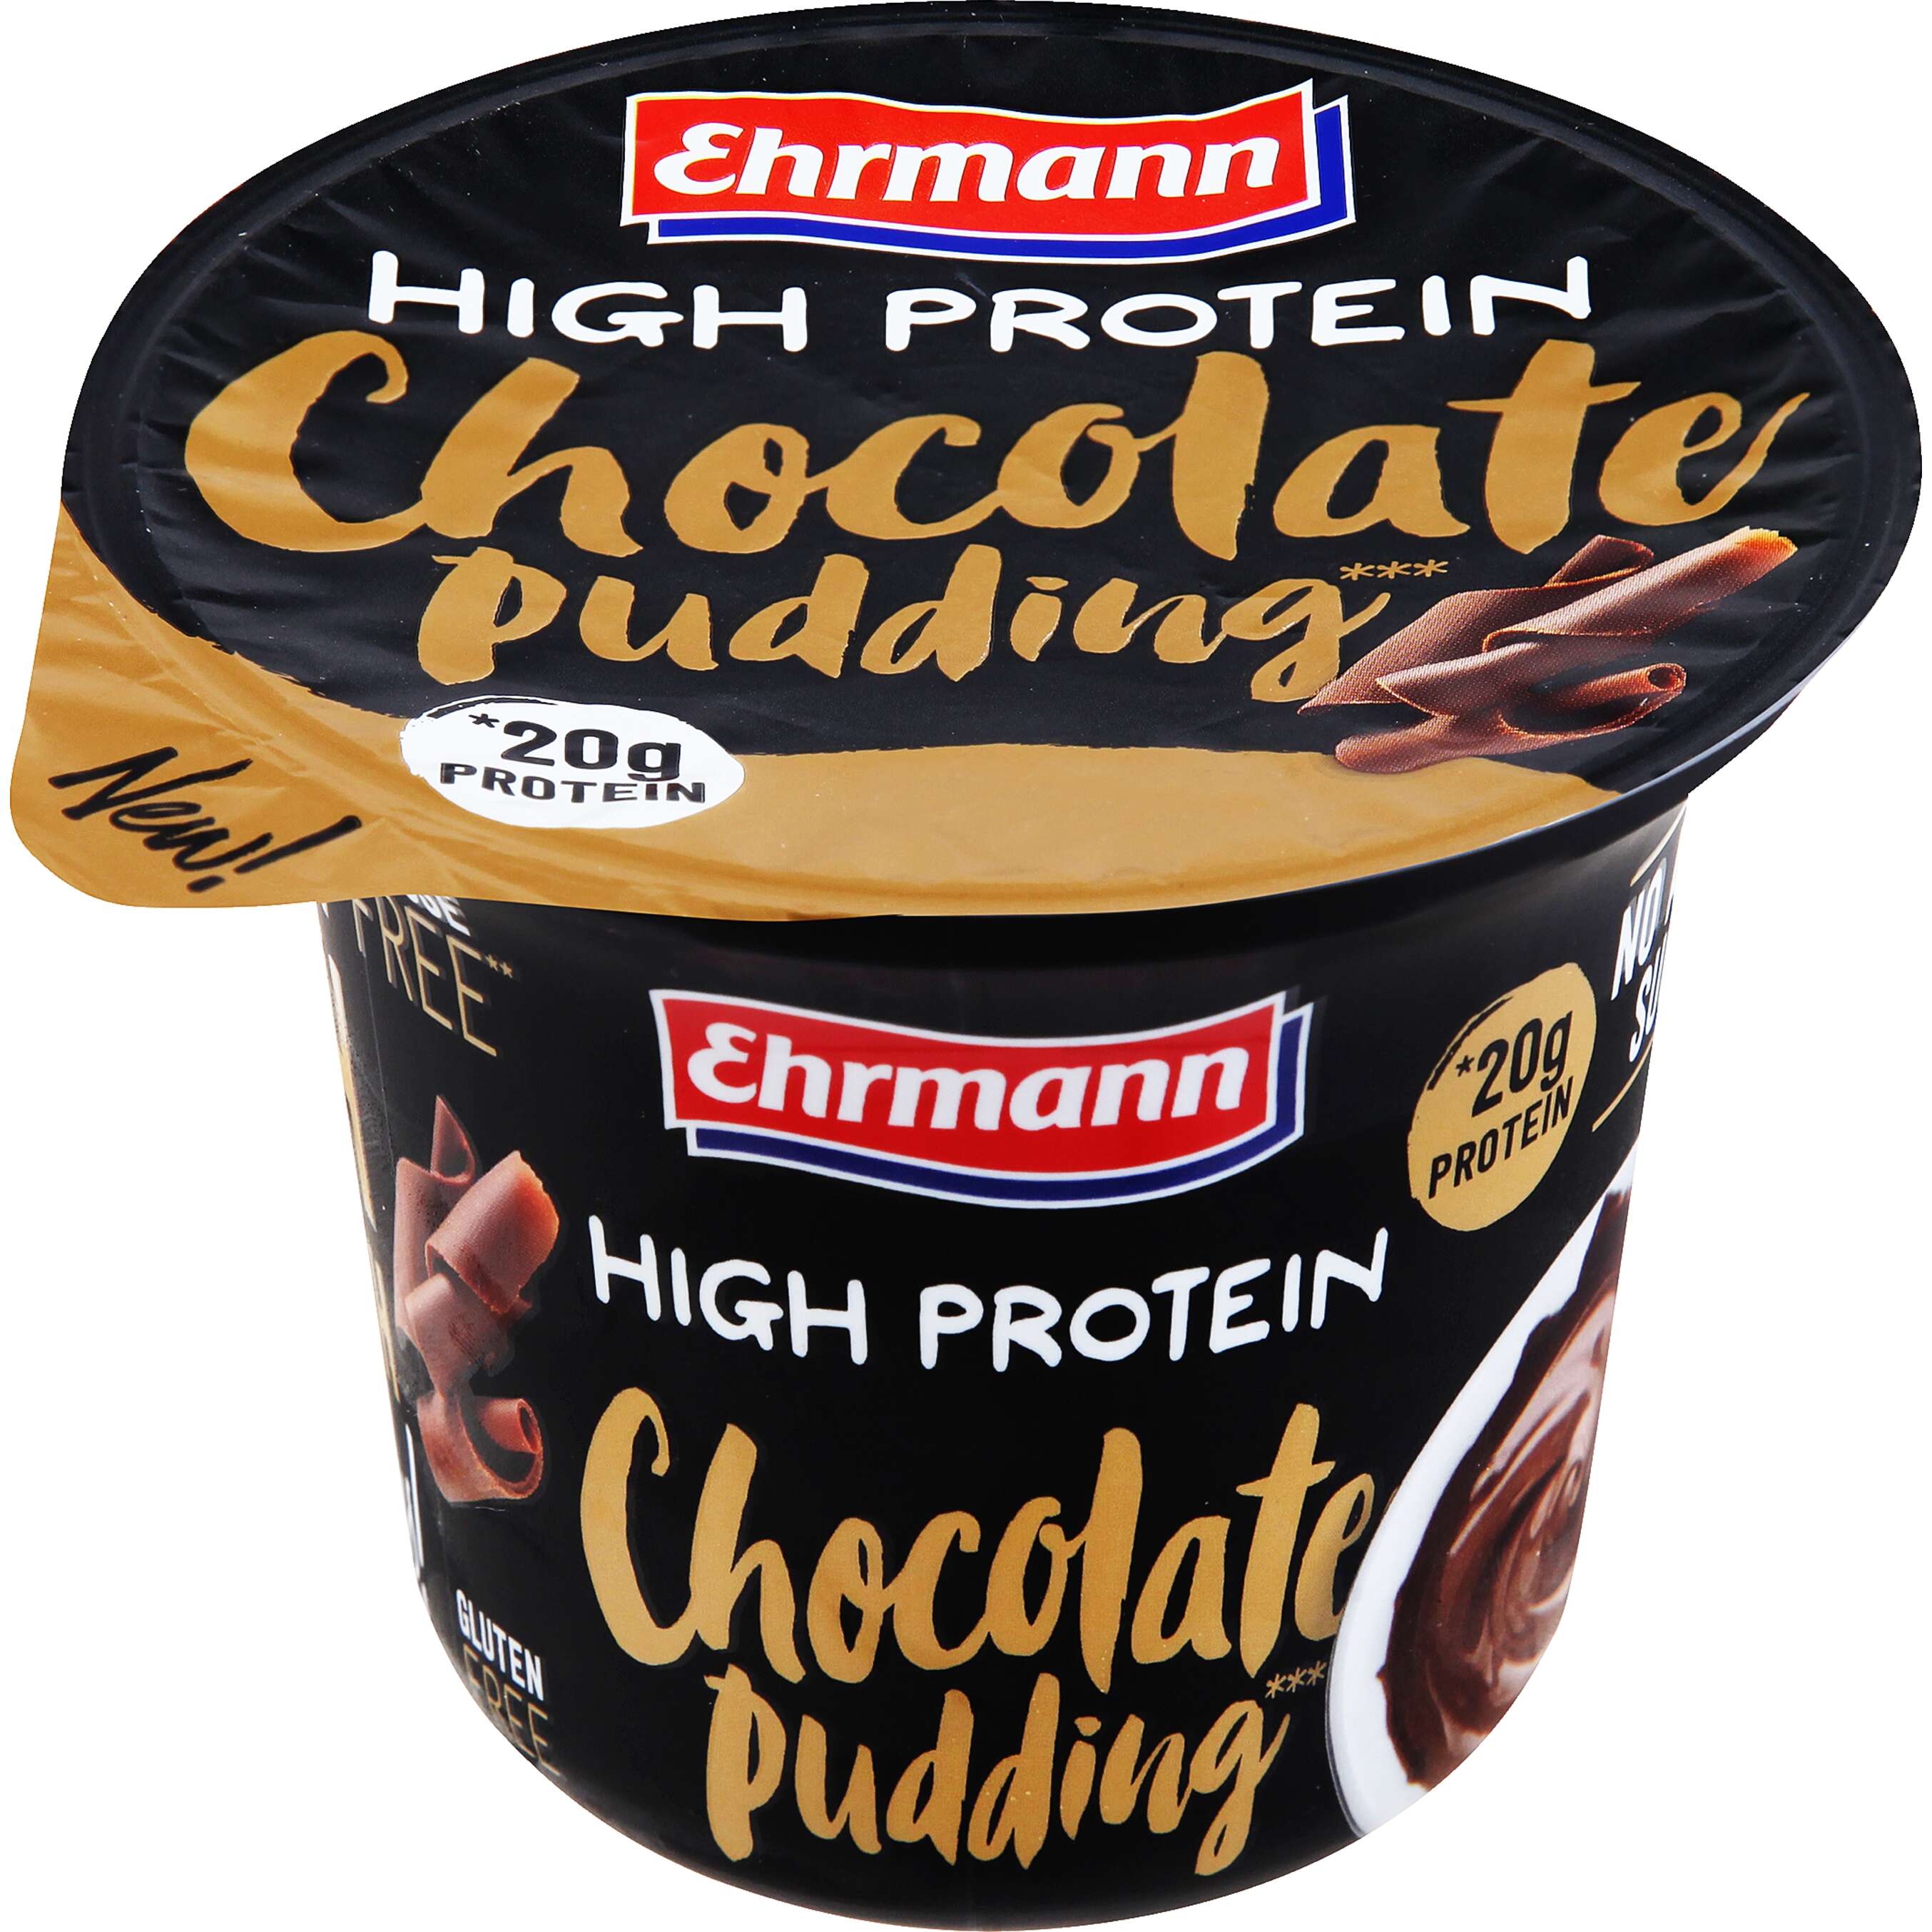 Zobrazit nabídku Ehrmann High Protein puding